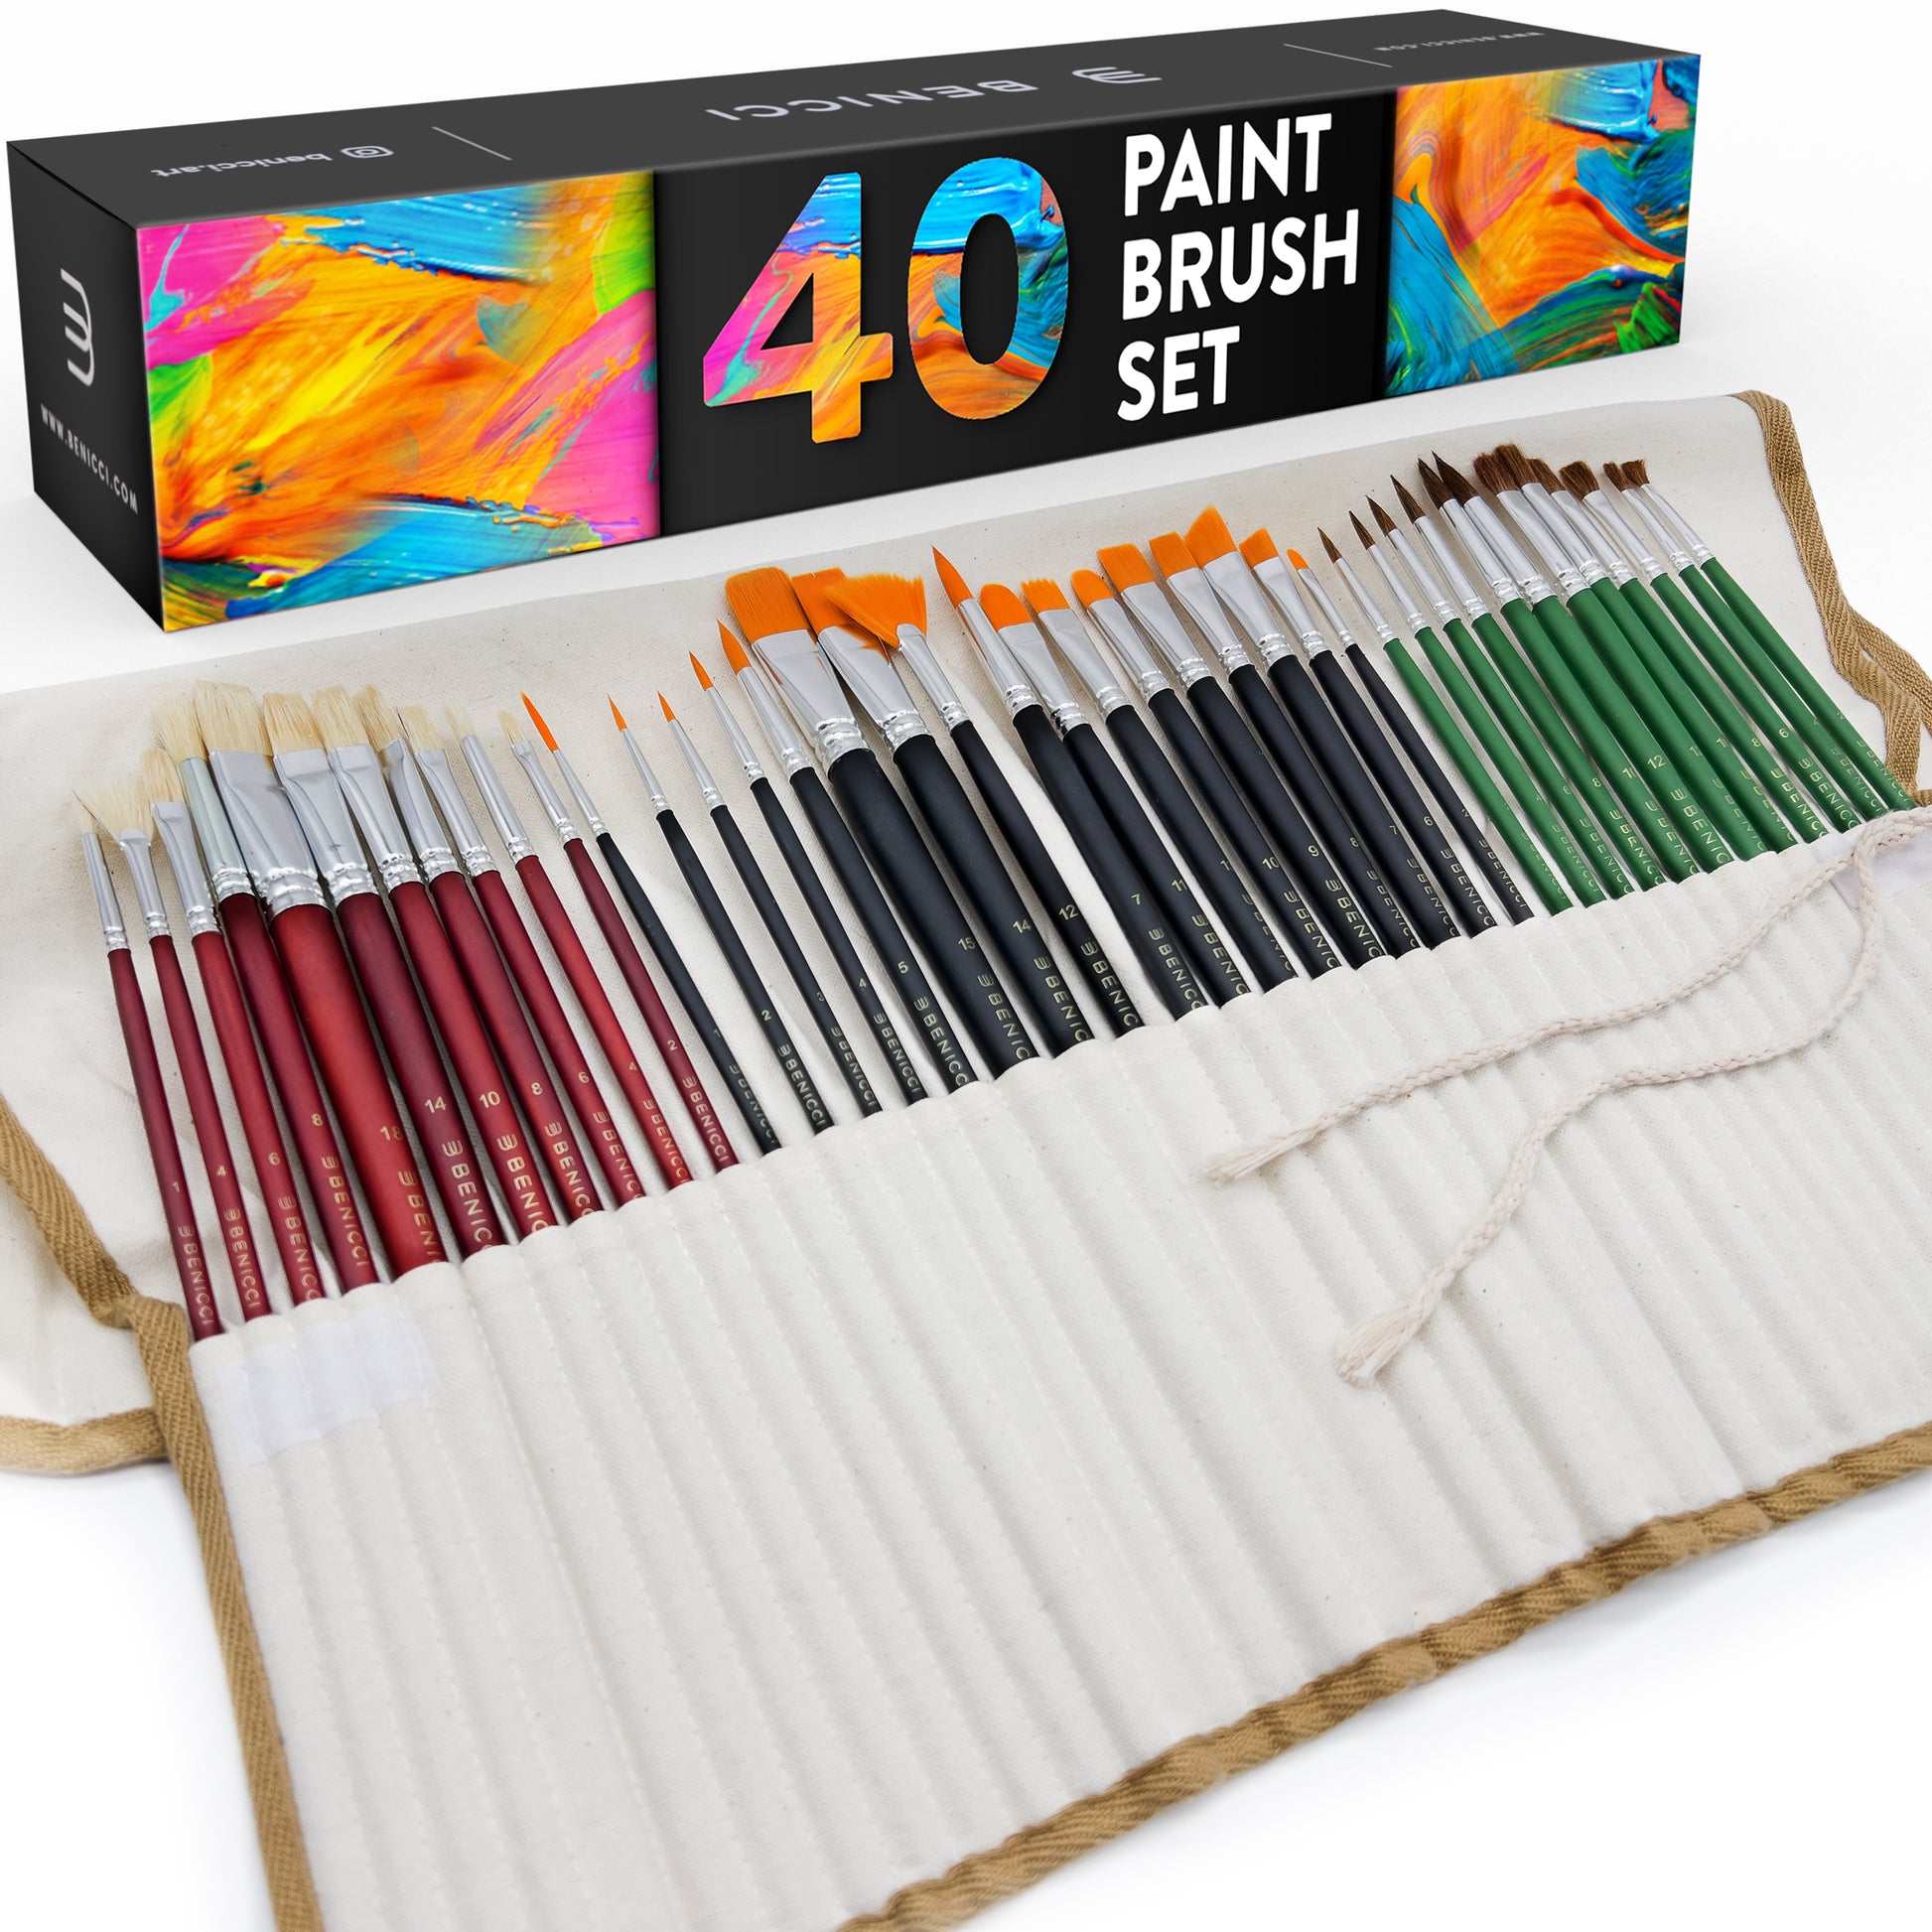 Paint Brush Set, 3 Piece, GOOD Quality